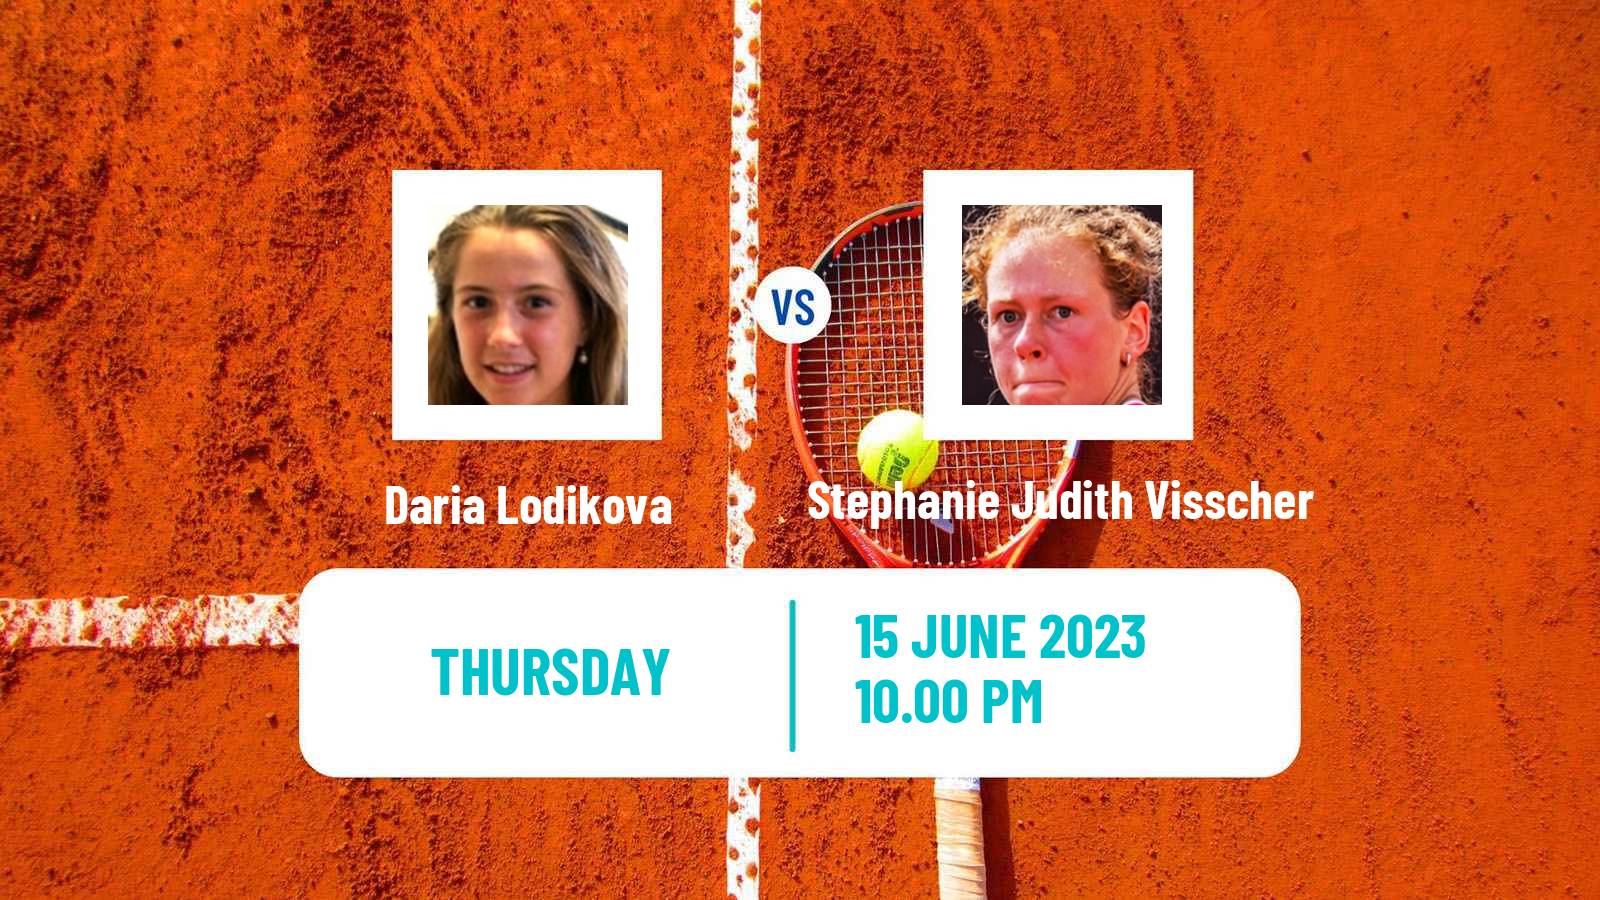 Tennis ITF W25 Tainan Women Daria Lodikova - Stephanie Judith Visscher